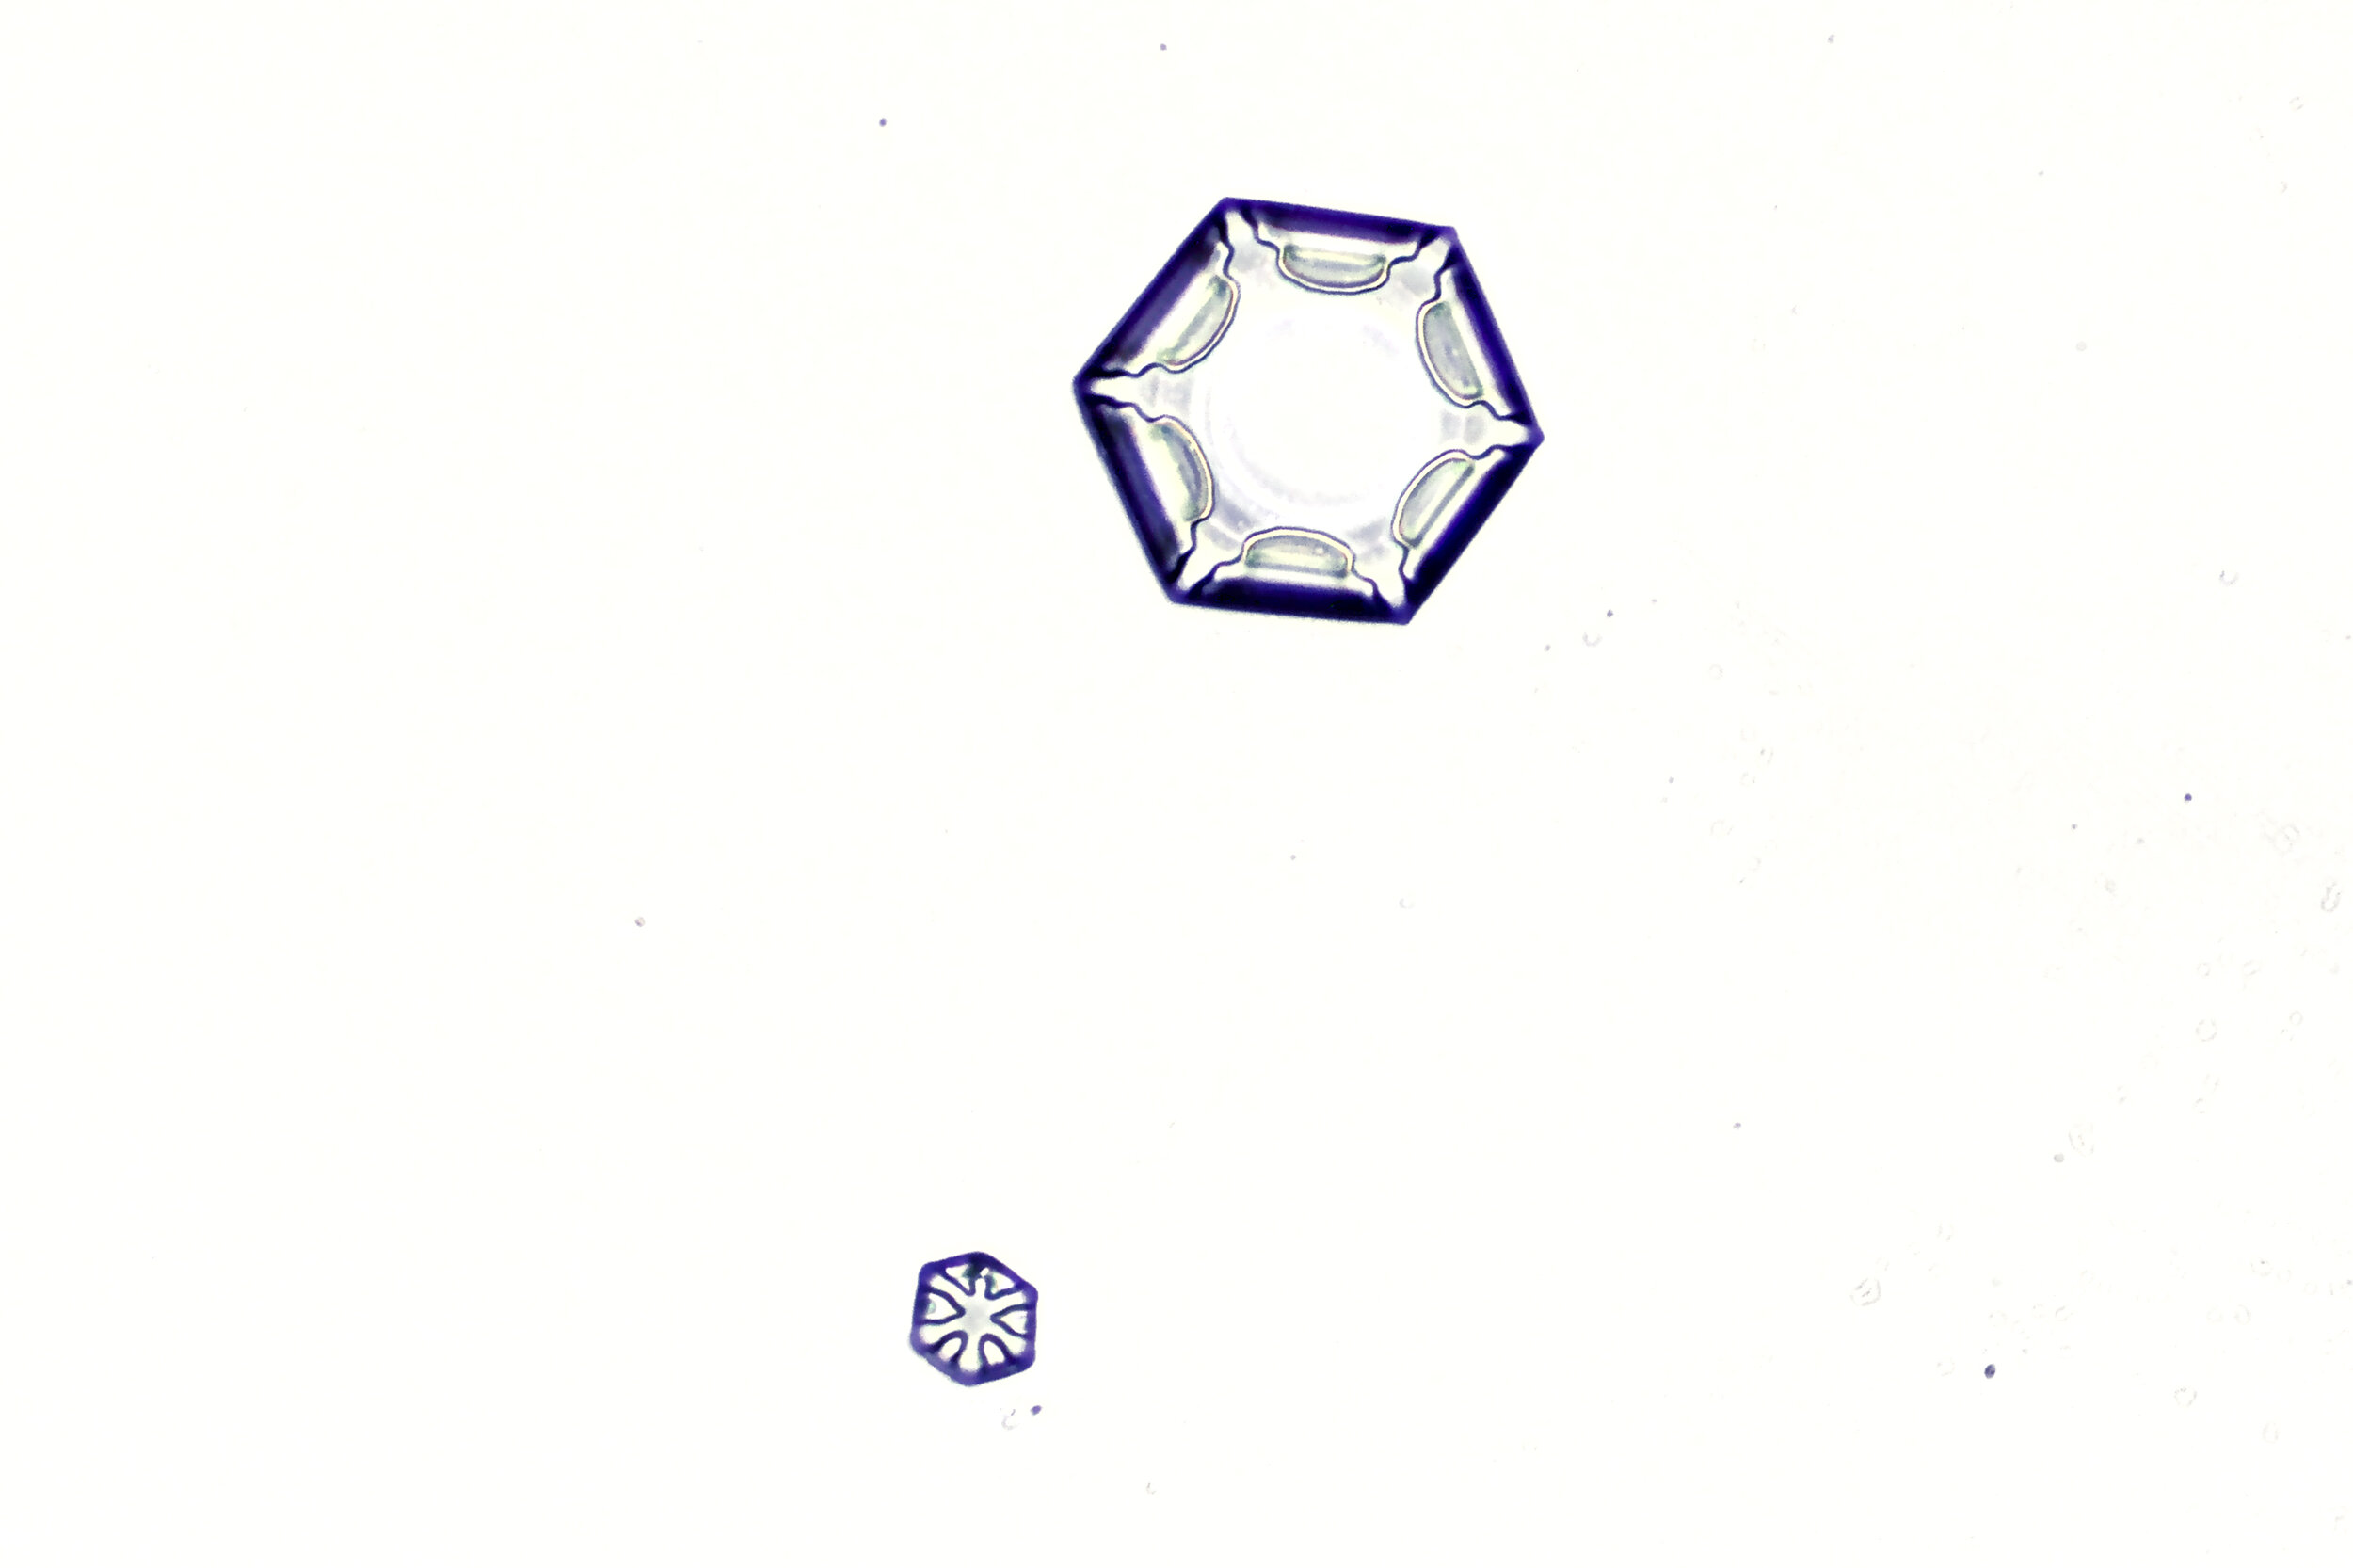 Gary-Mawe-Hexagonal-Plate-Snowflake-06.jpg